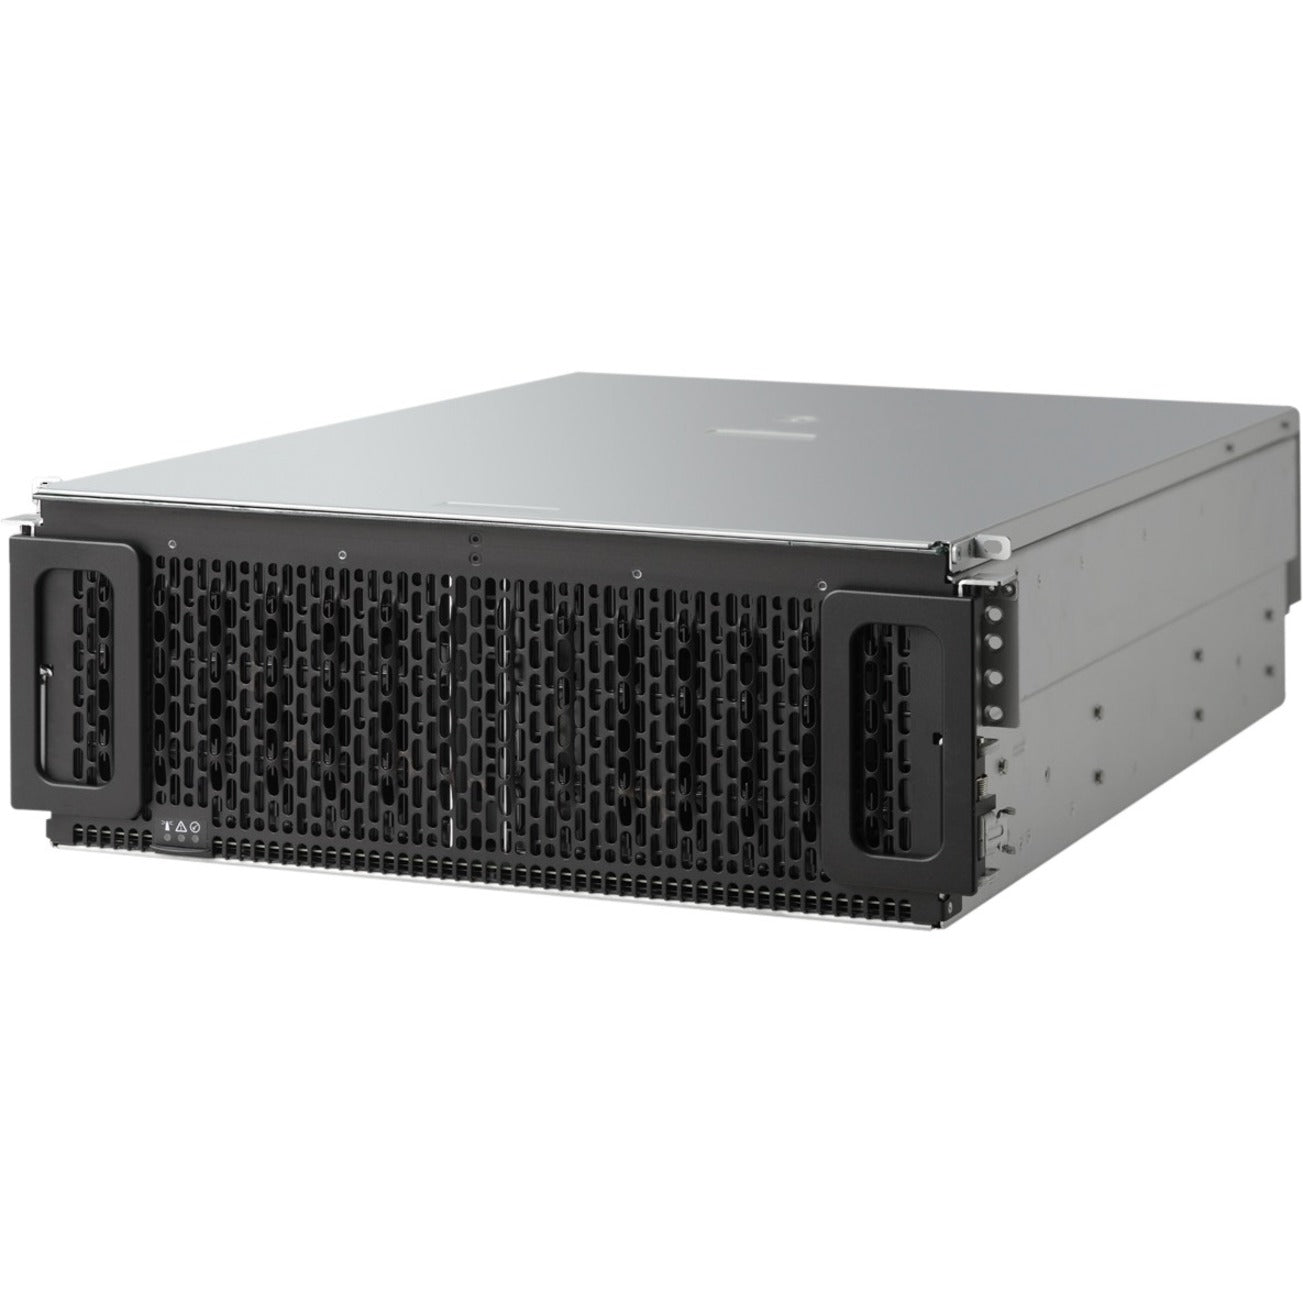 HGST Ultrastar Data60 SE-4U60-08F05 Drive Enclosure - 12Gb/s SAS Host Interface - 4U Rack-mountable